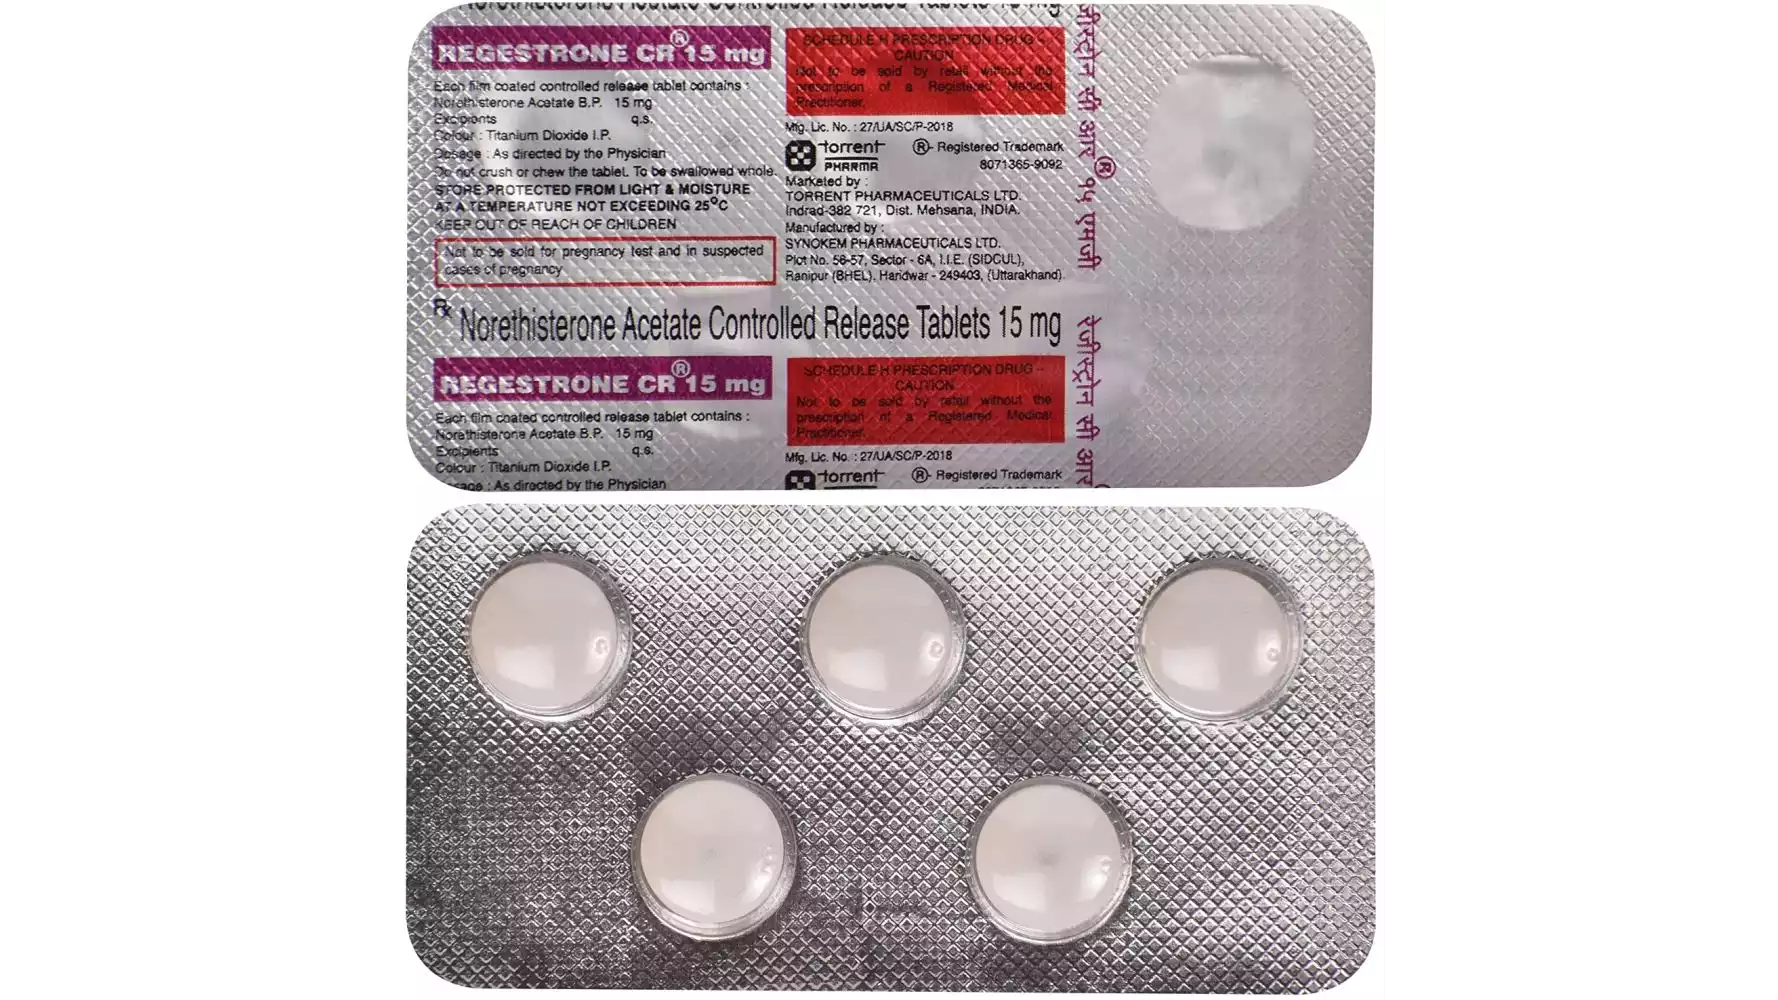 Regestrone CR Tablet (15mg) (5tab)